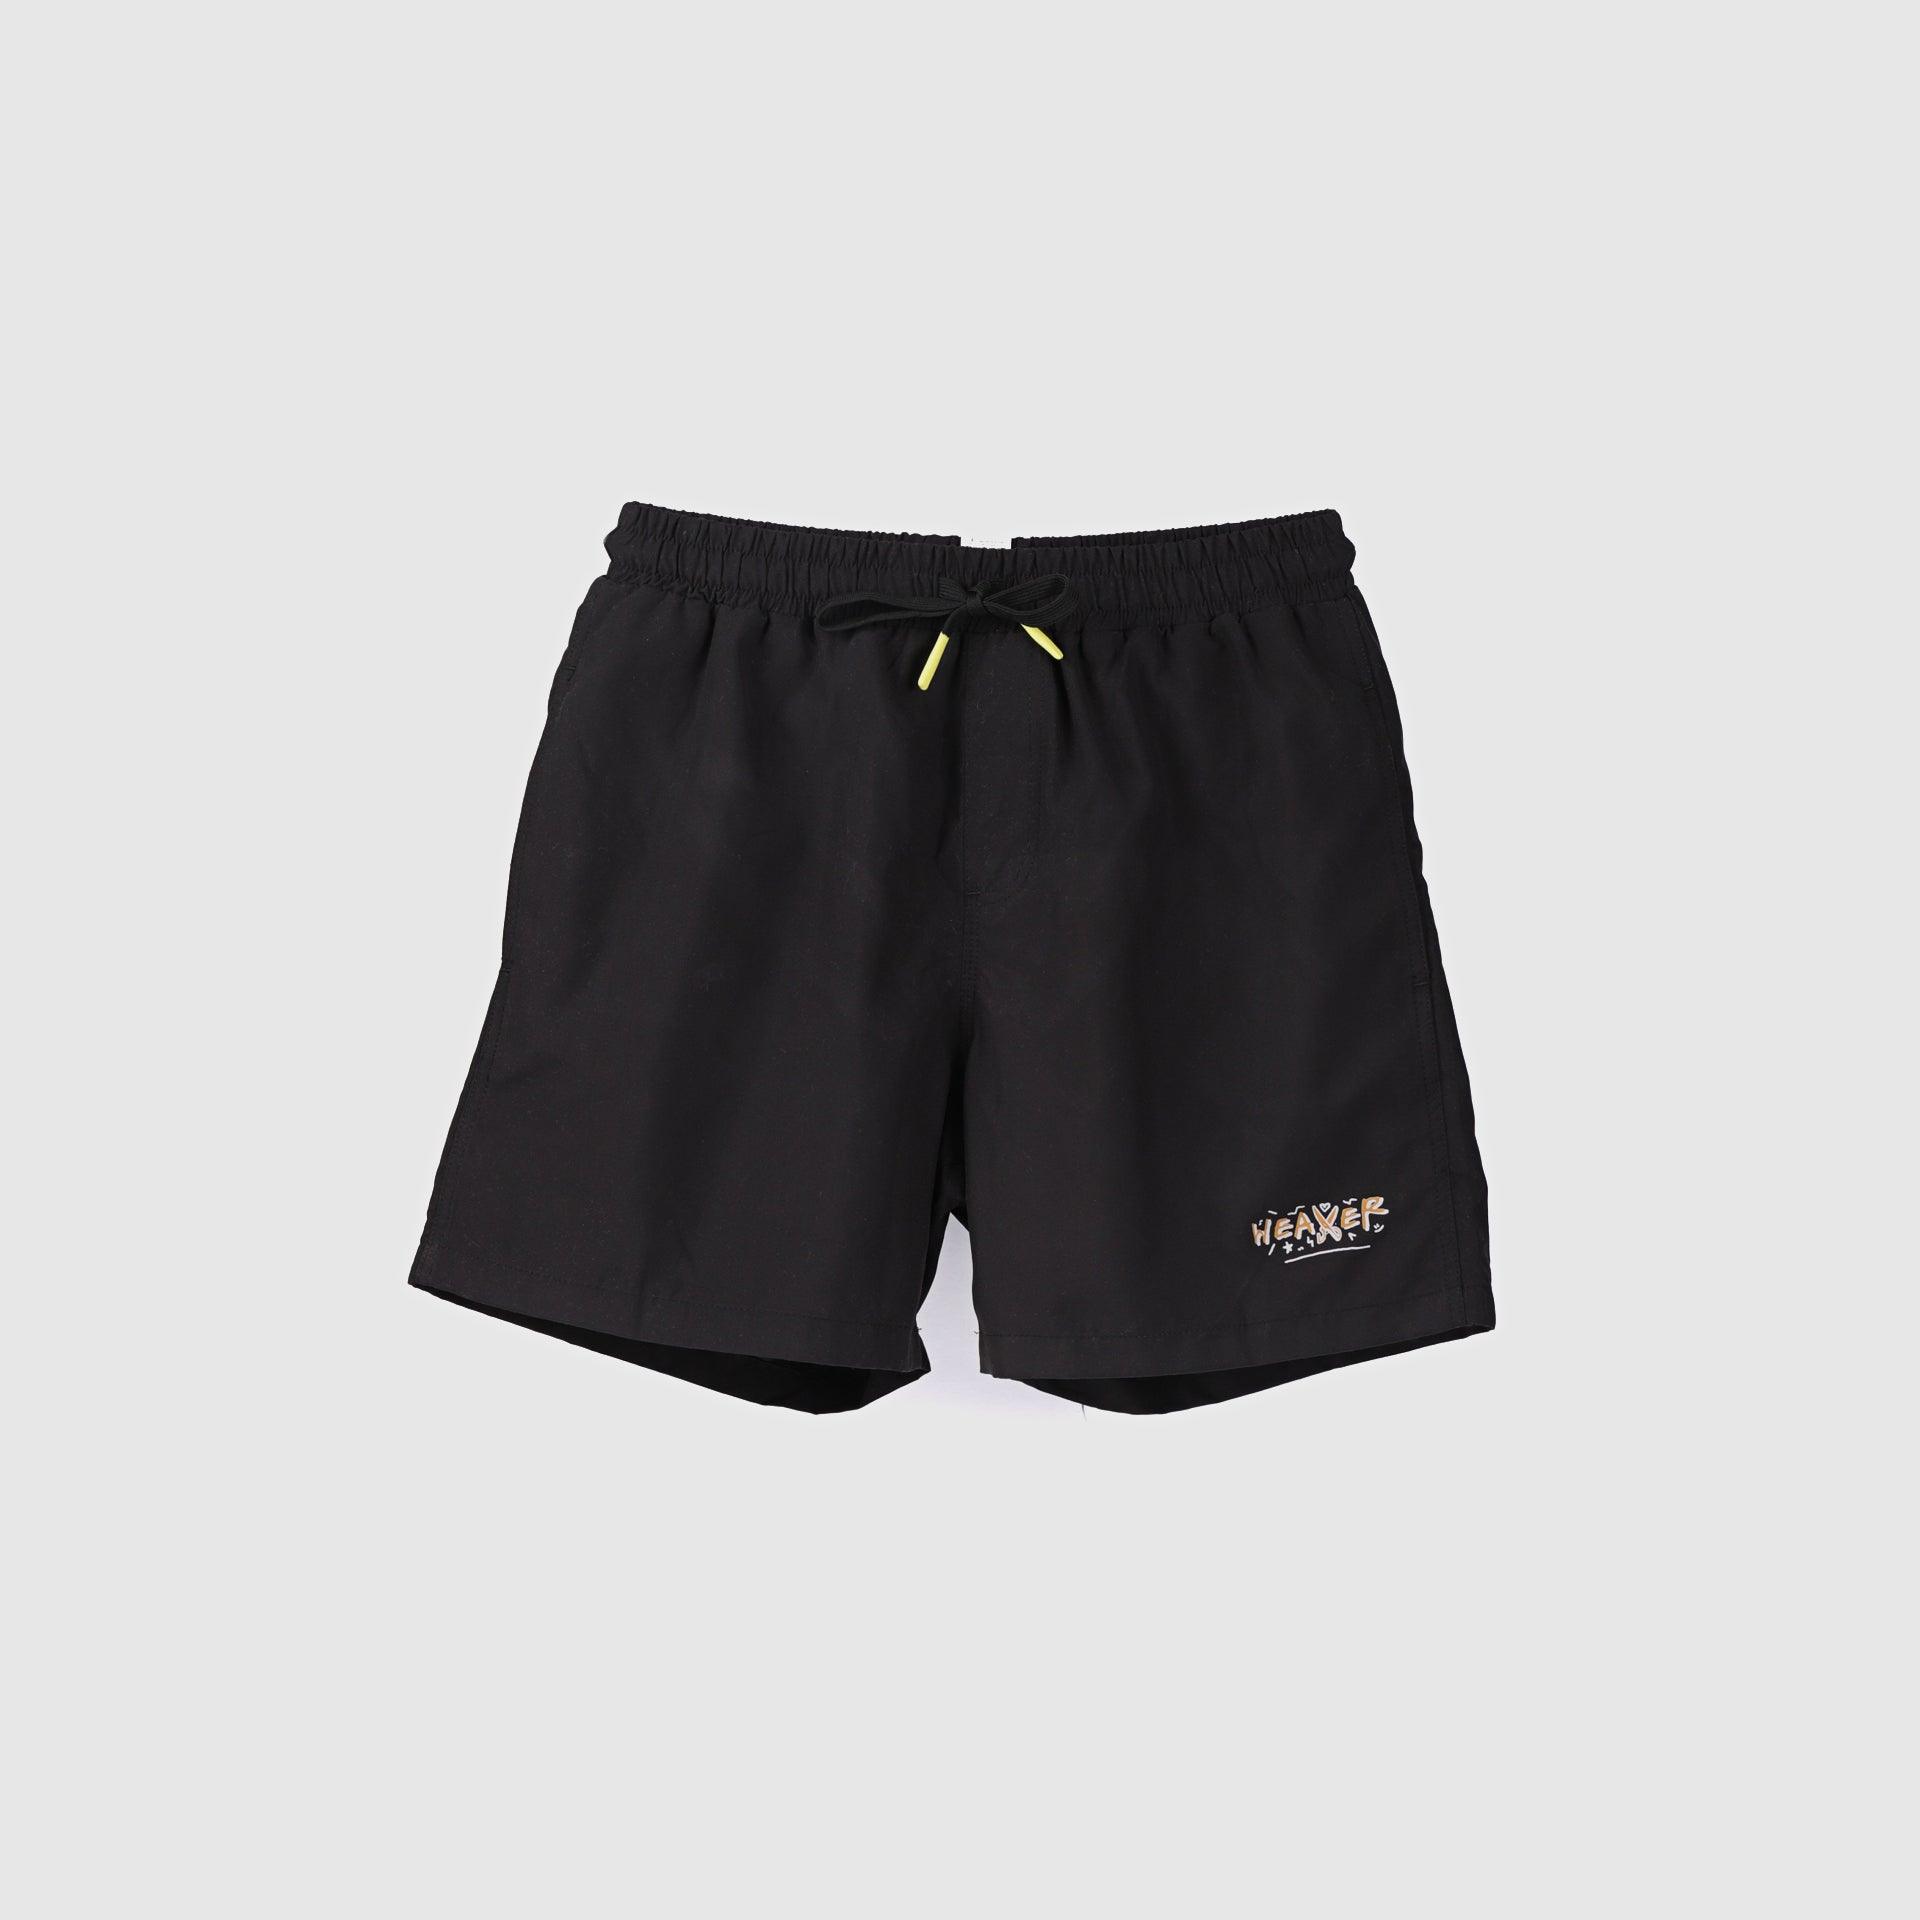 Black Swimming Plain Shorts From Weaver Design - WECRE8